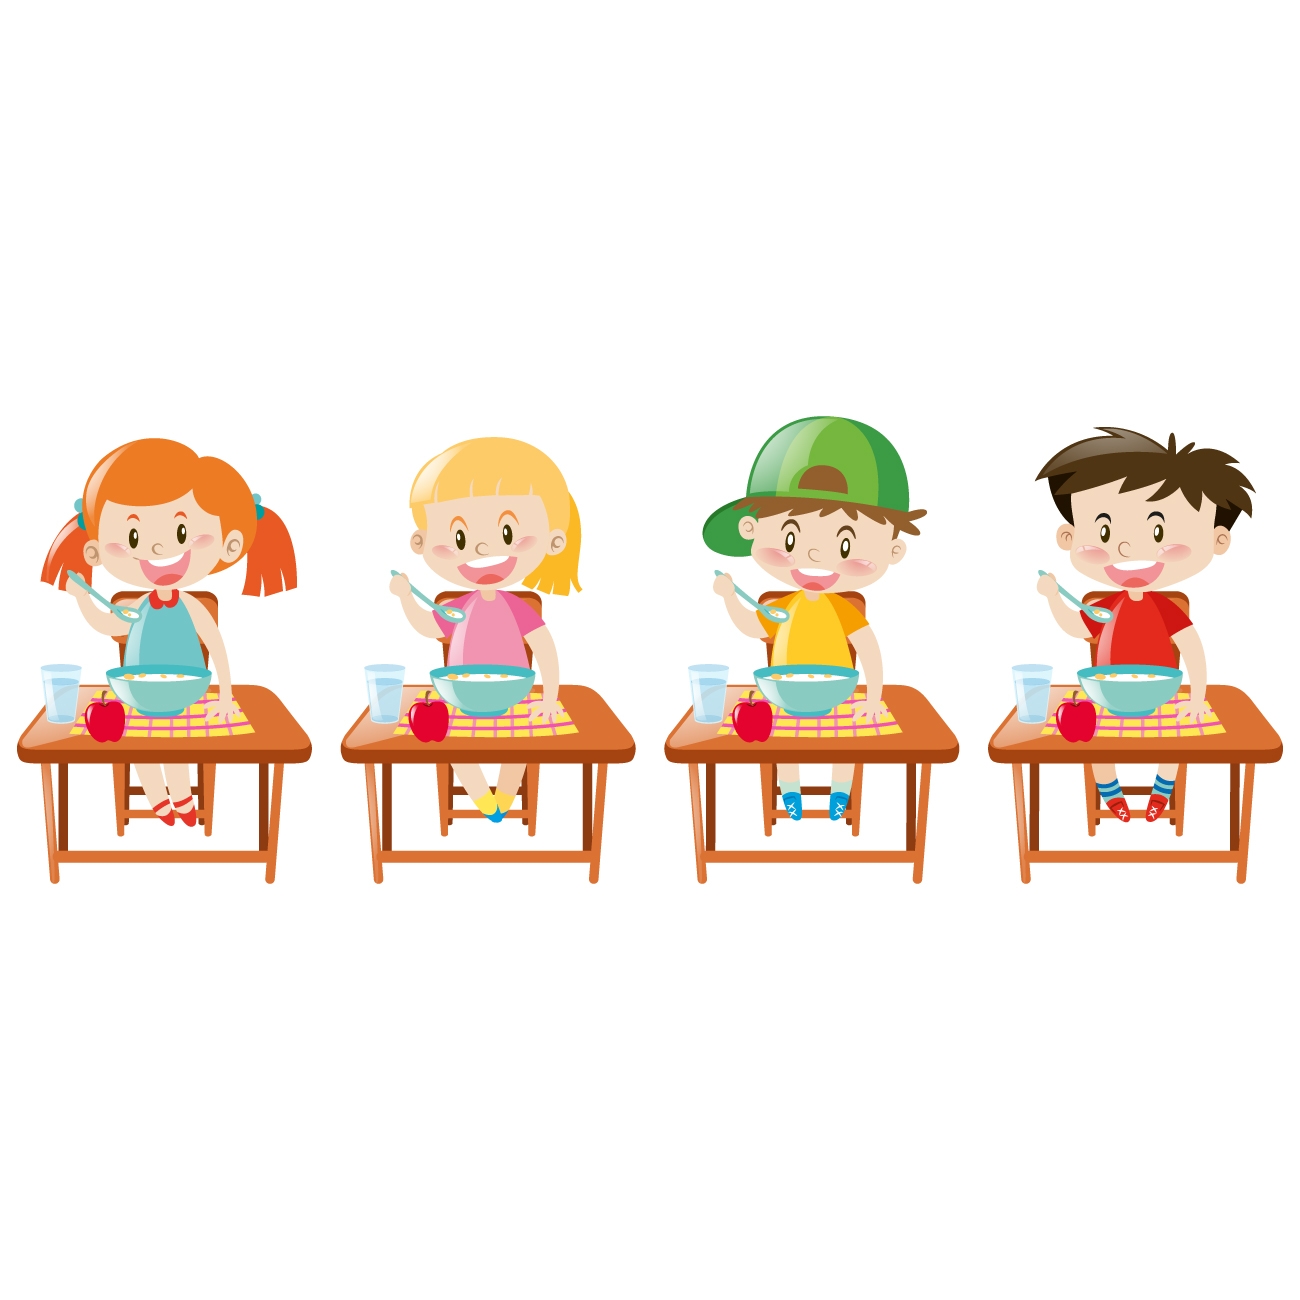 Дети сидят за столом в детском саду